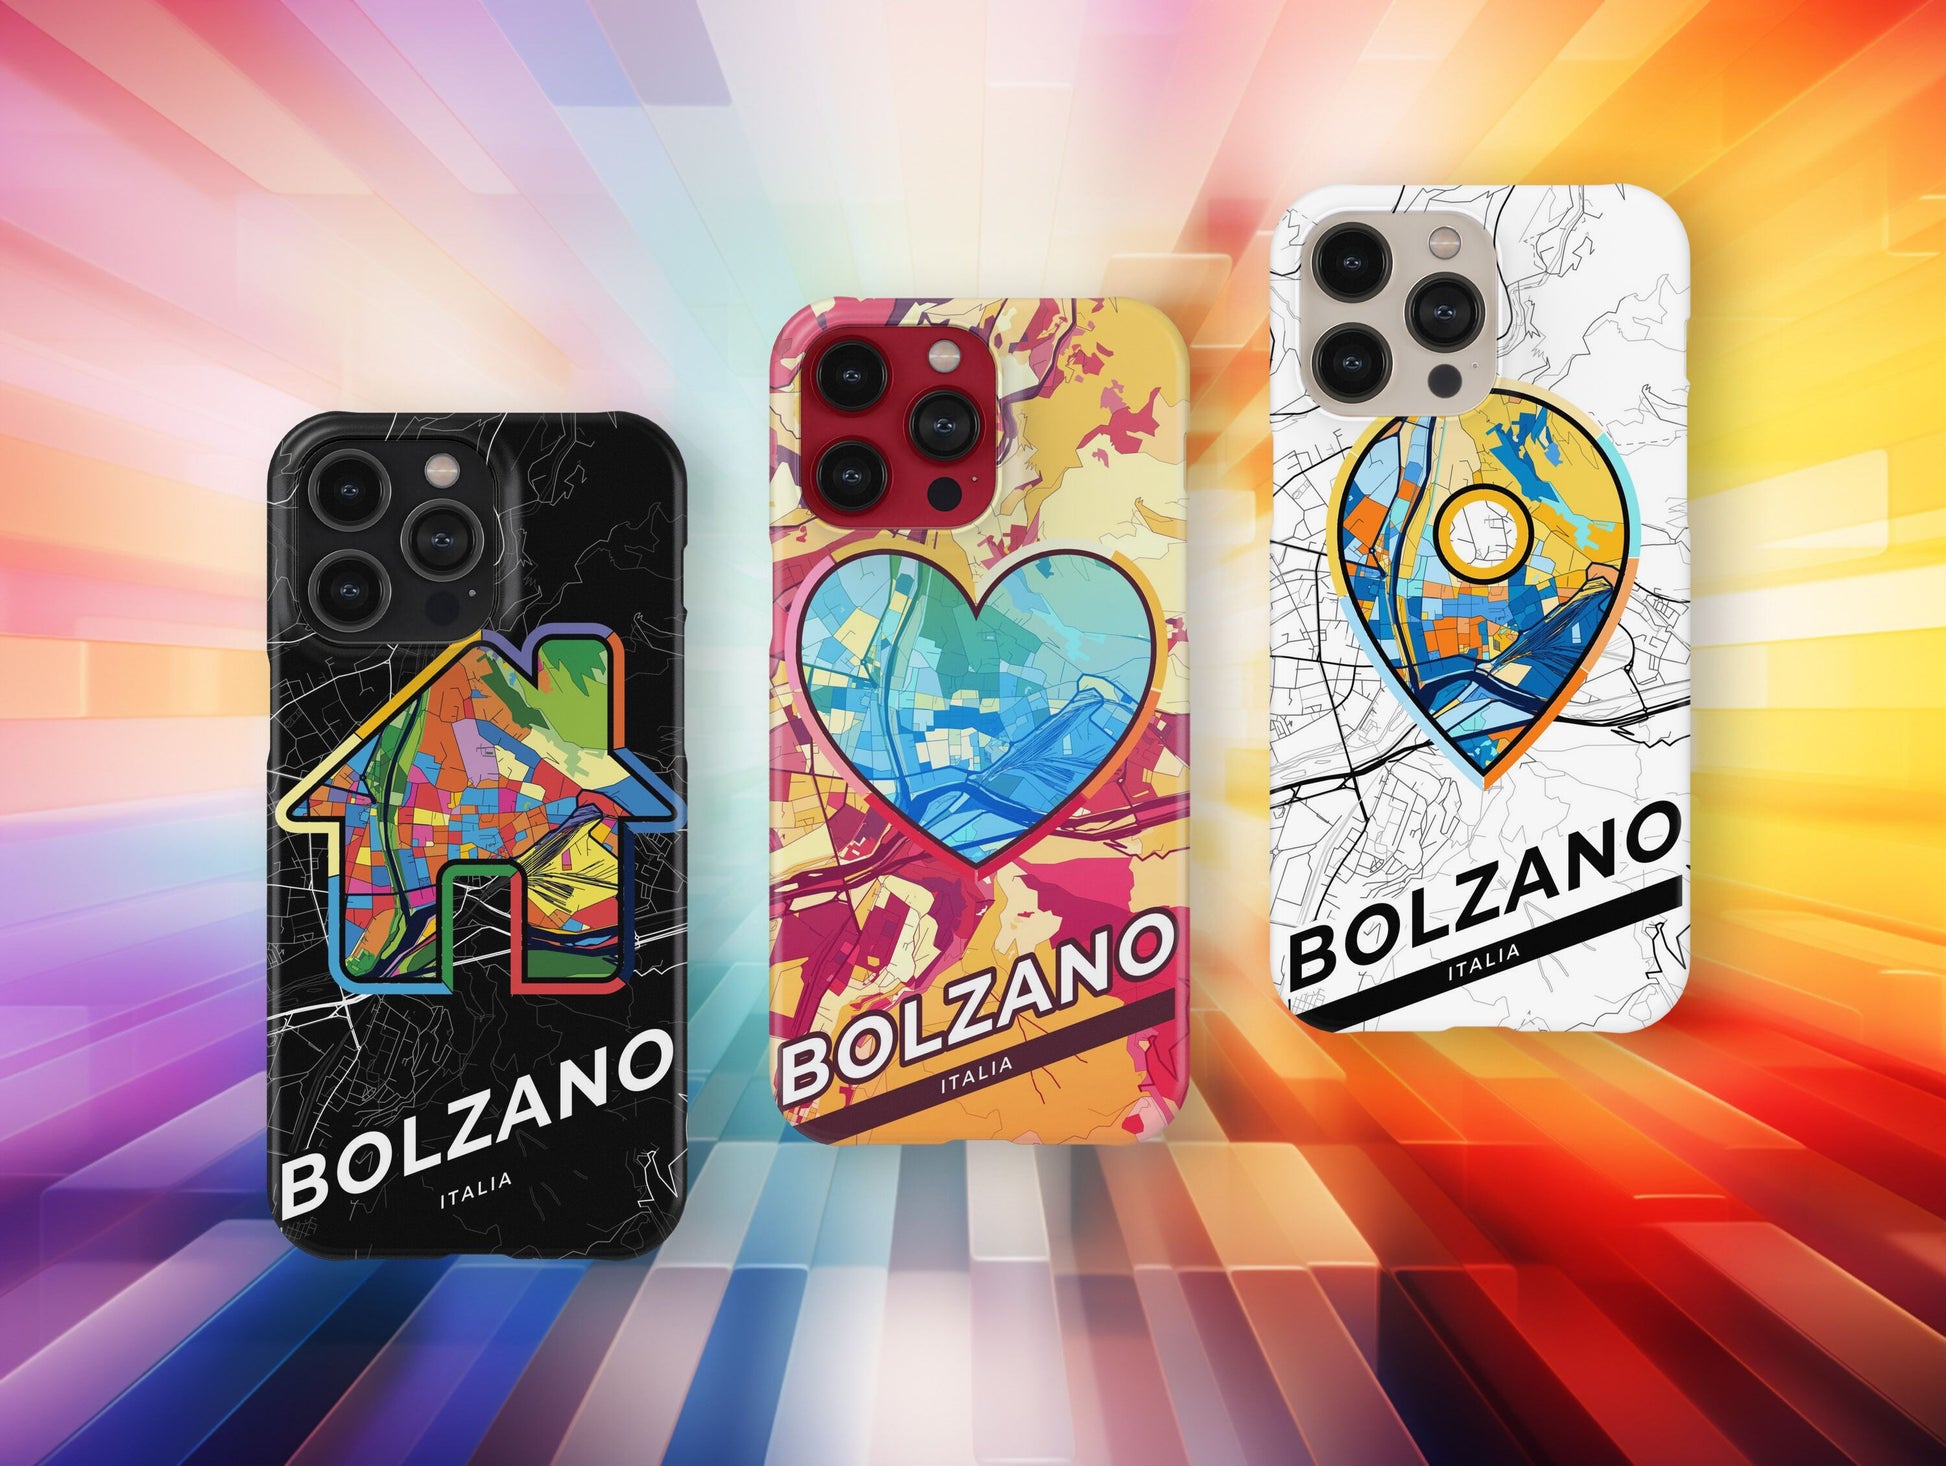 Bolzano Italy slim phone case with colorful icon. Birthday, wedding or housewarming gift. Couple match cases.